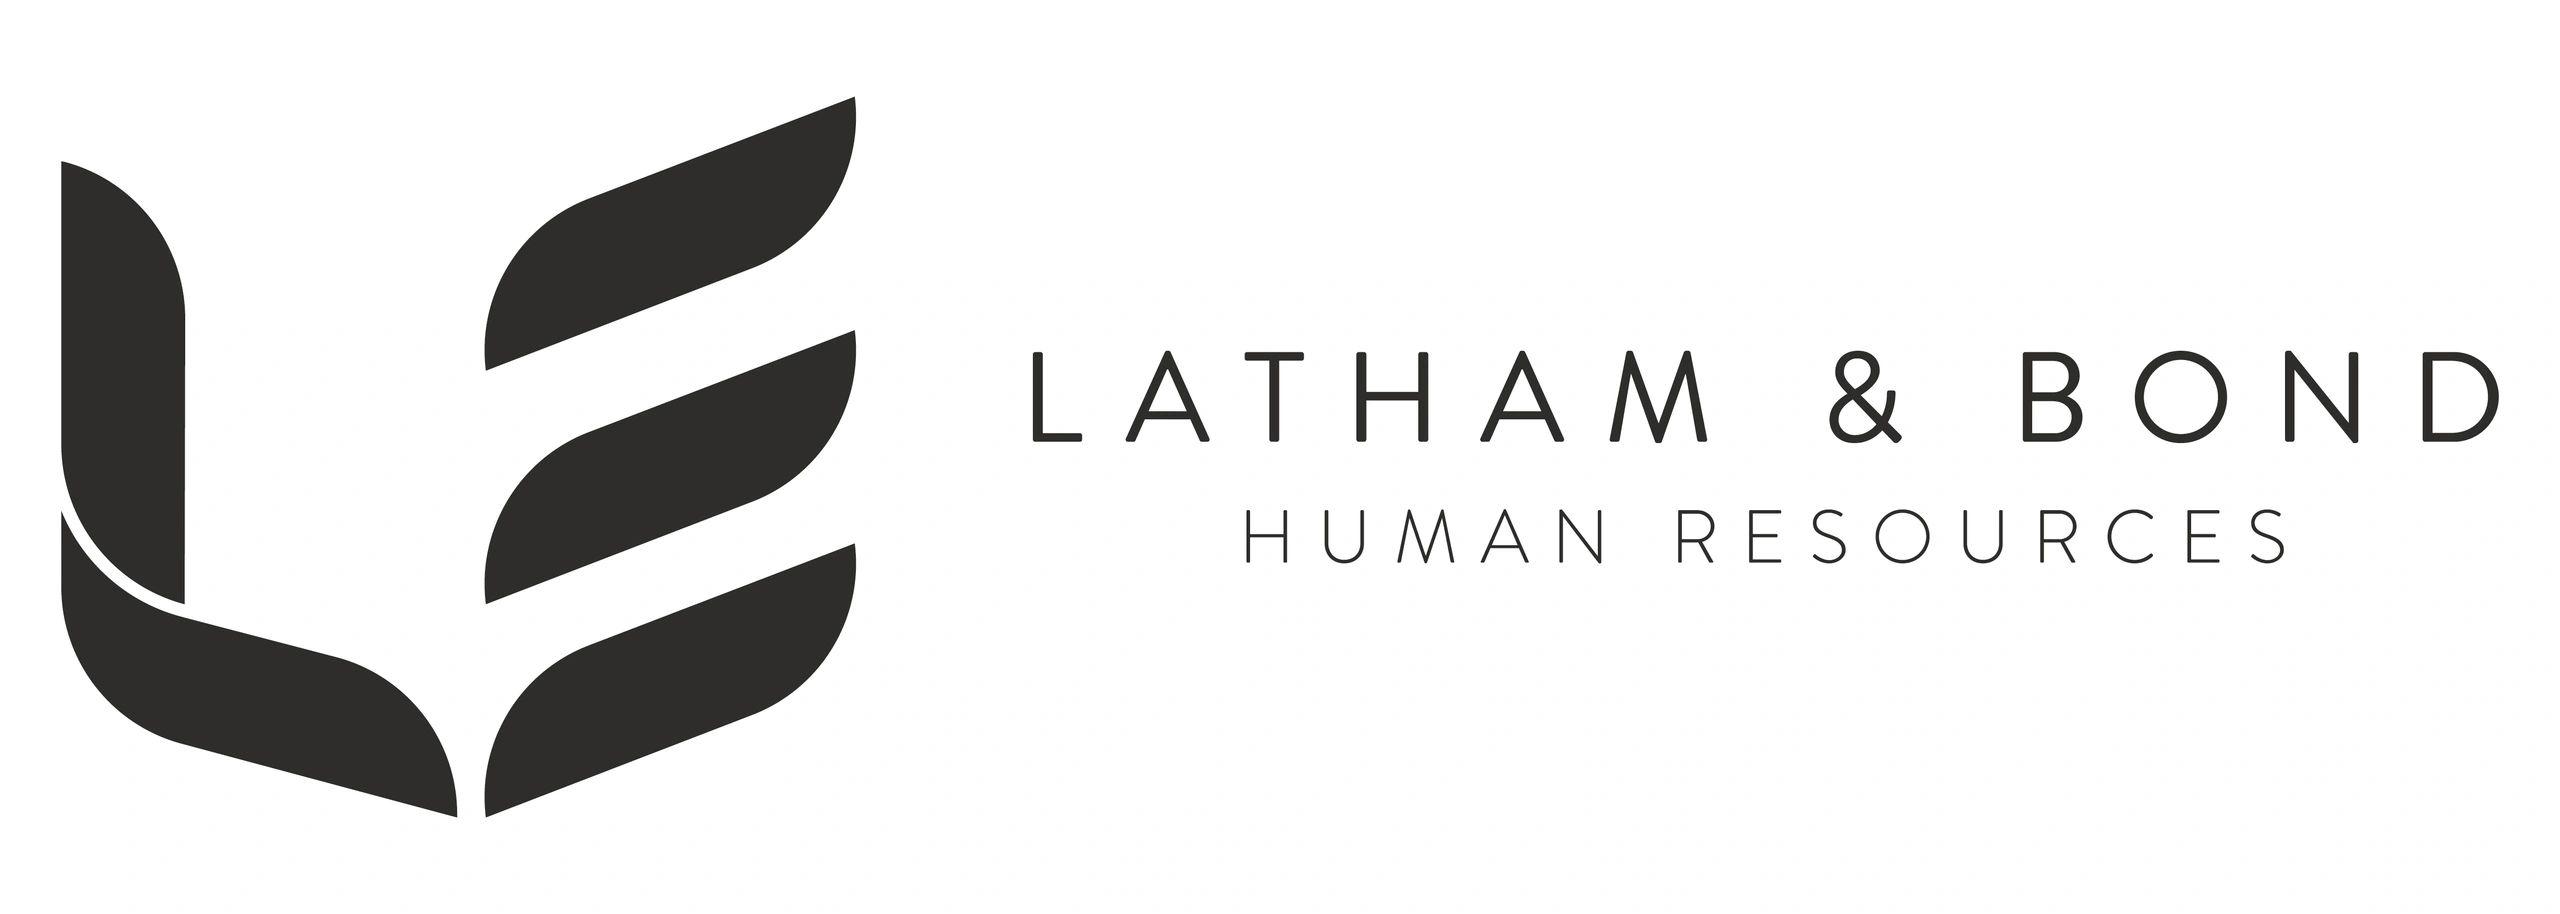 Product Specialist HR Recruitment Services | Latham & Bond Human Resources image